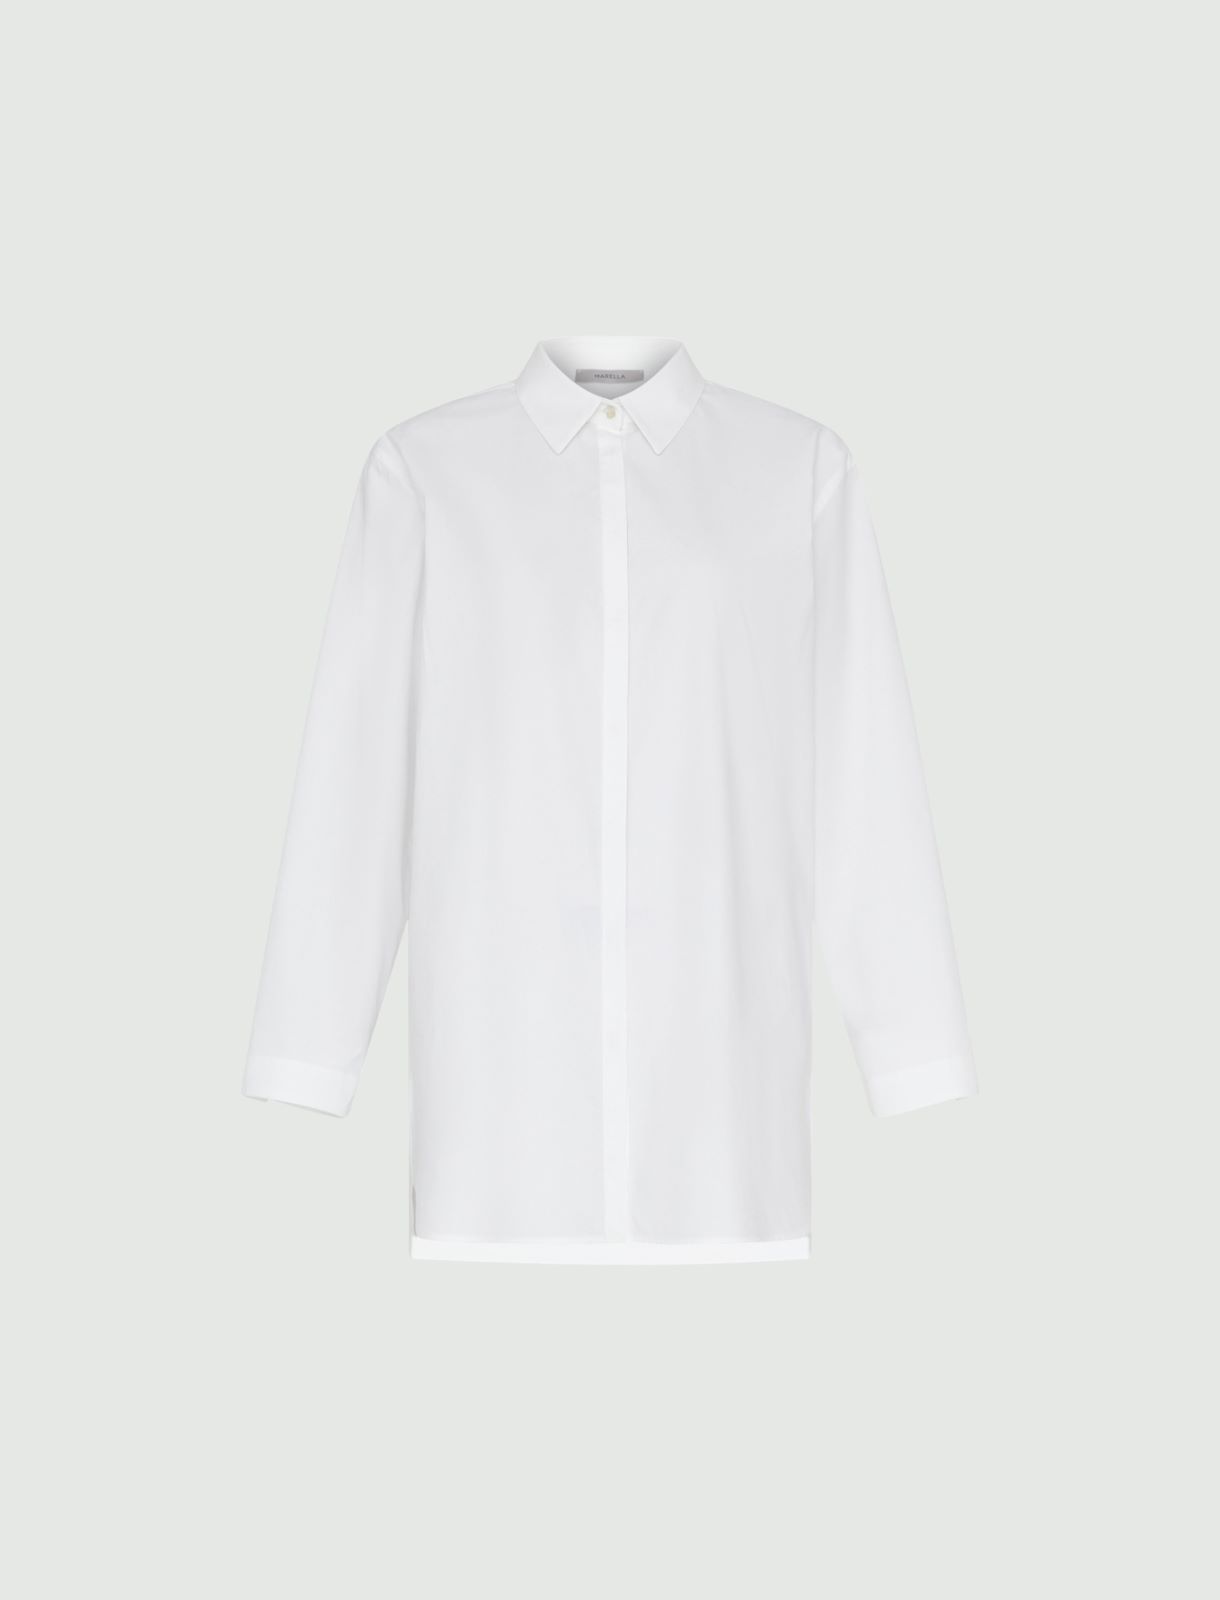 Oversized shirt - White - Marina Rinaldi - 5